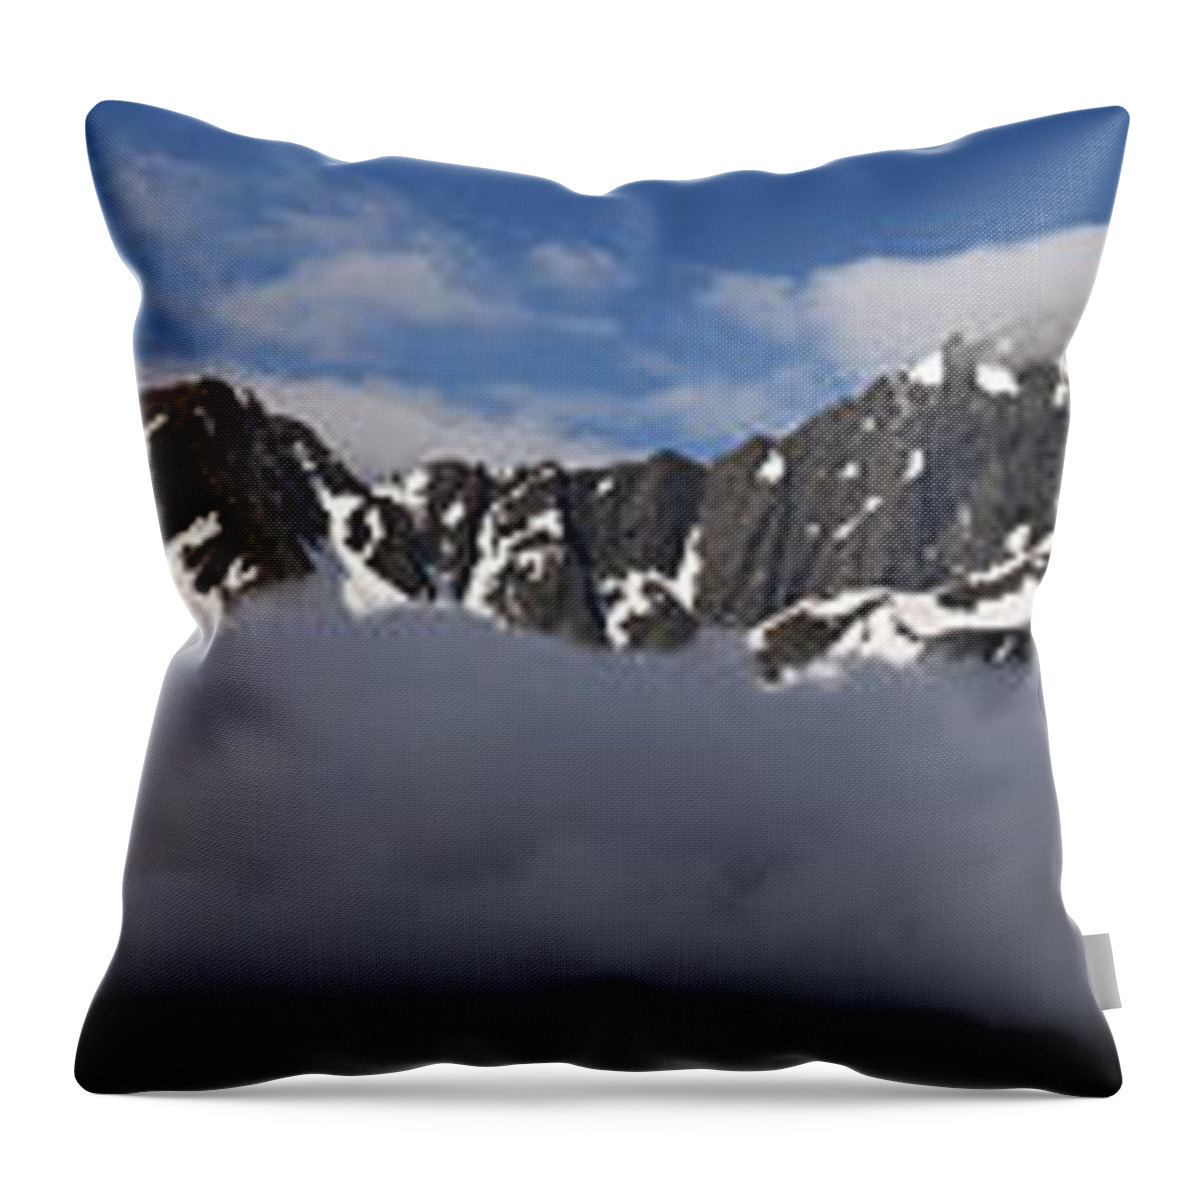 Seward Mountain Range Throw Pillow featuring the photograph Seward Mountain Range by Wes and Dotty Weber